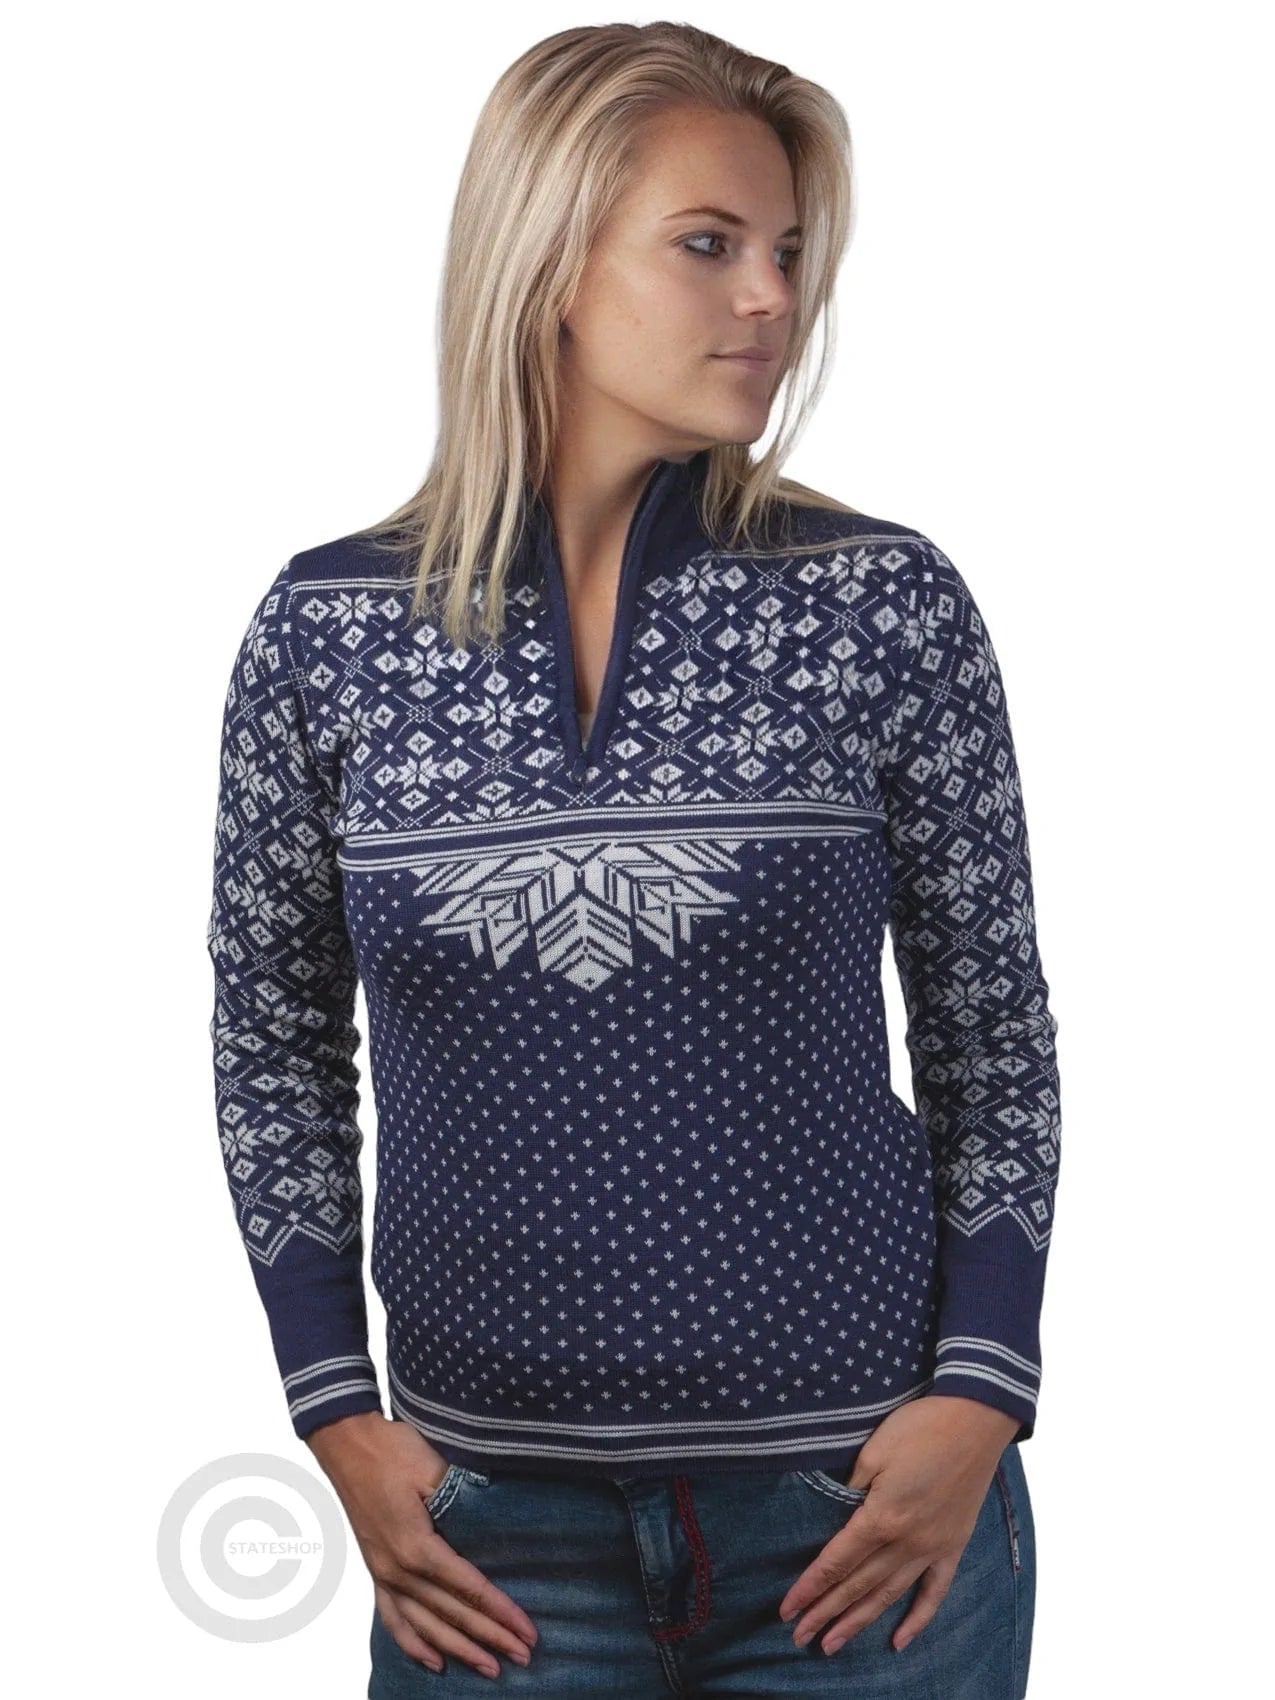 NorfindeNordic merino women sweater, blue